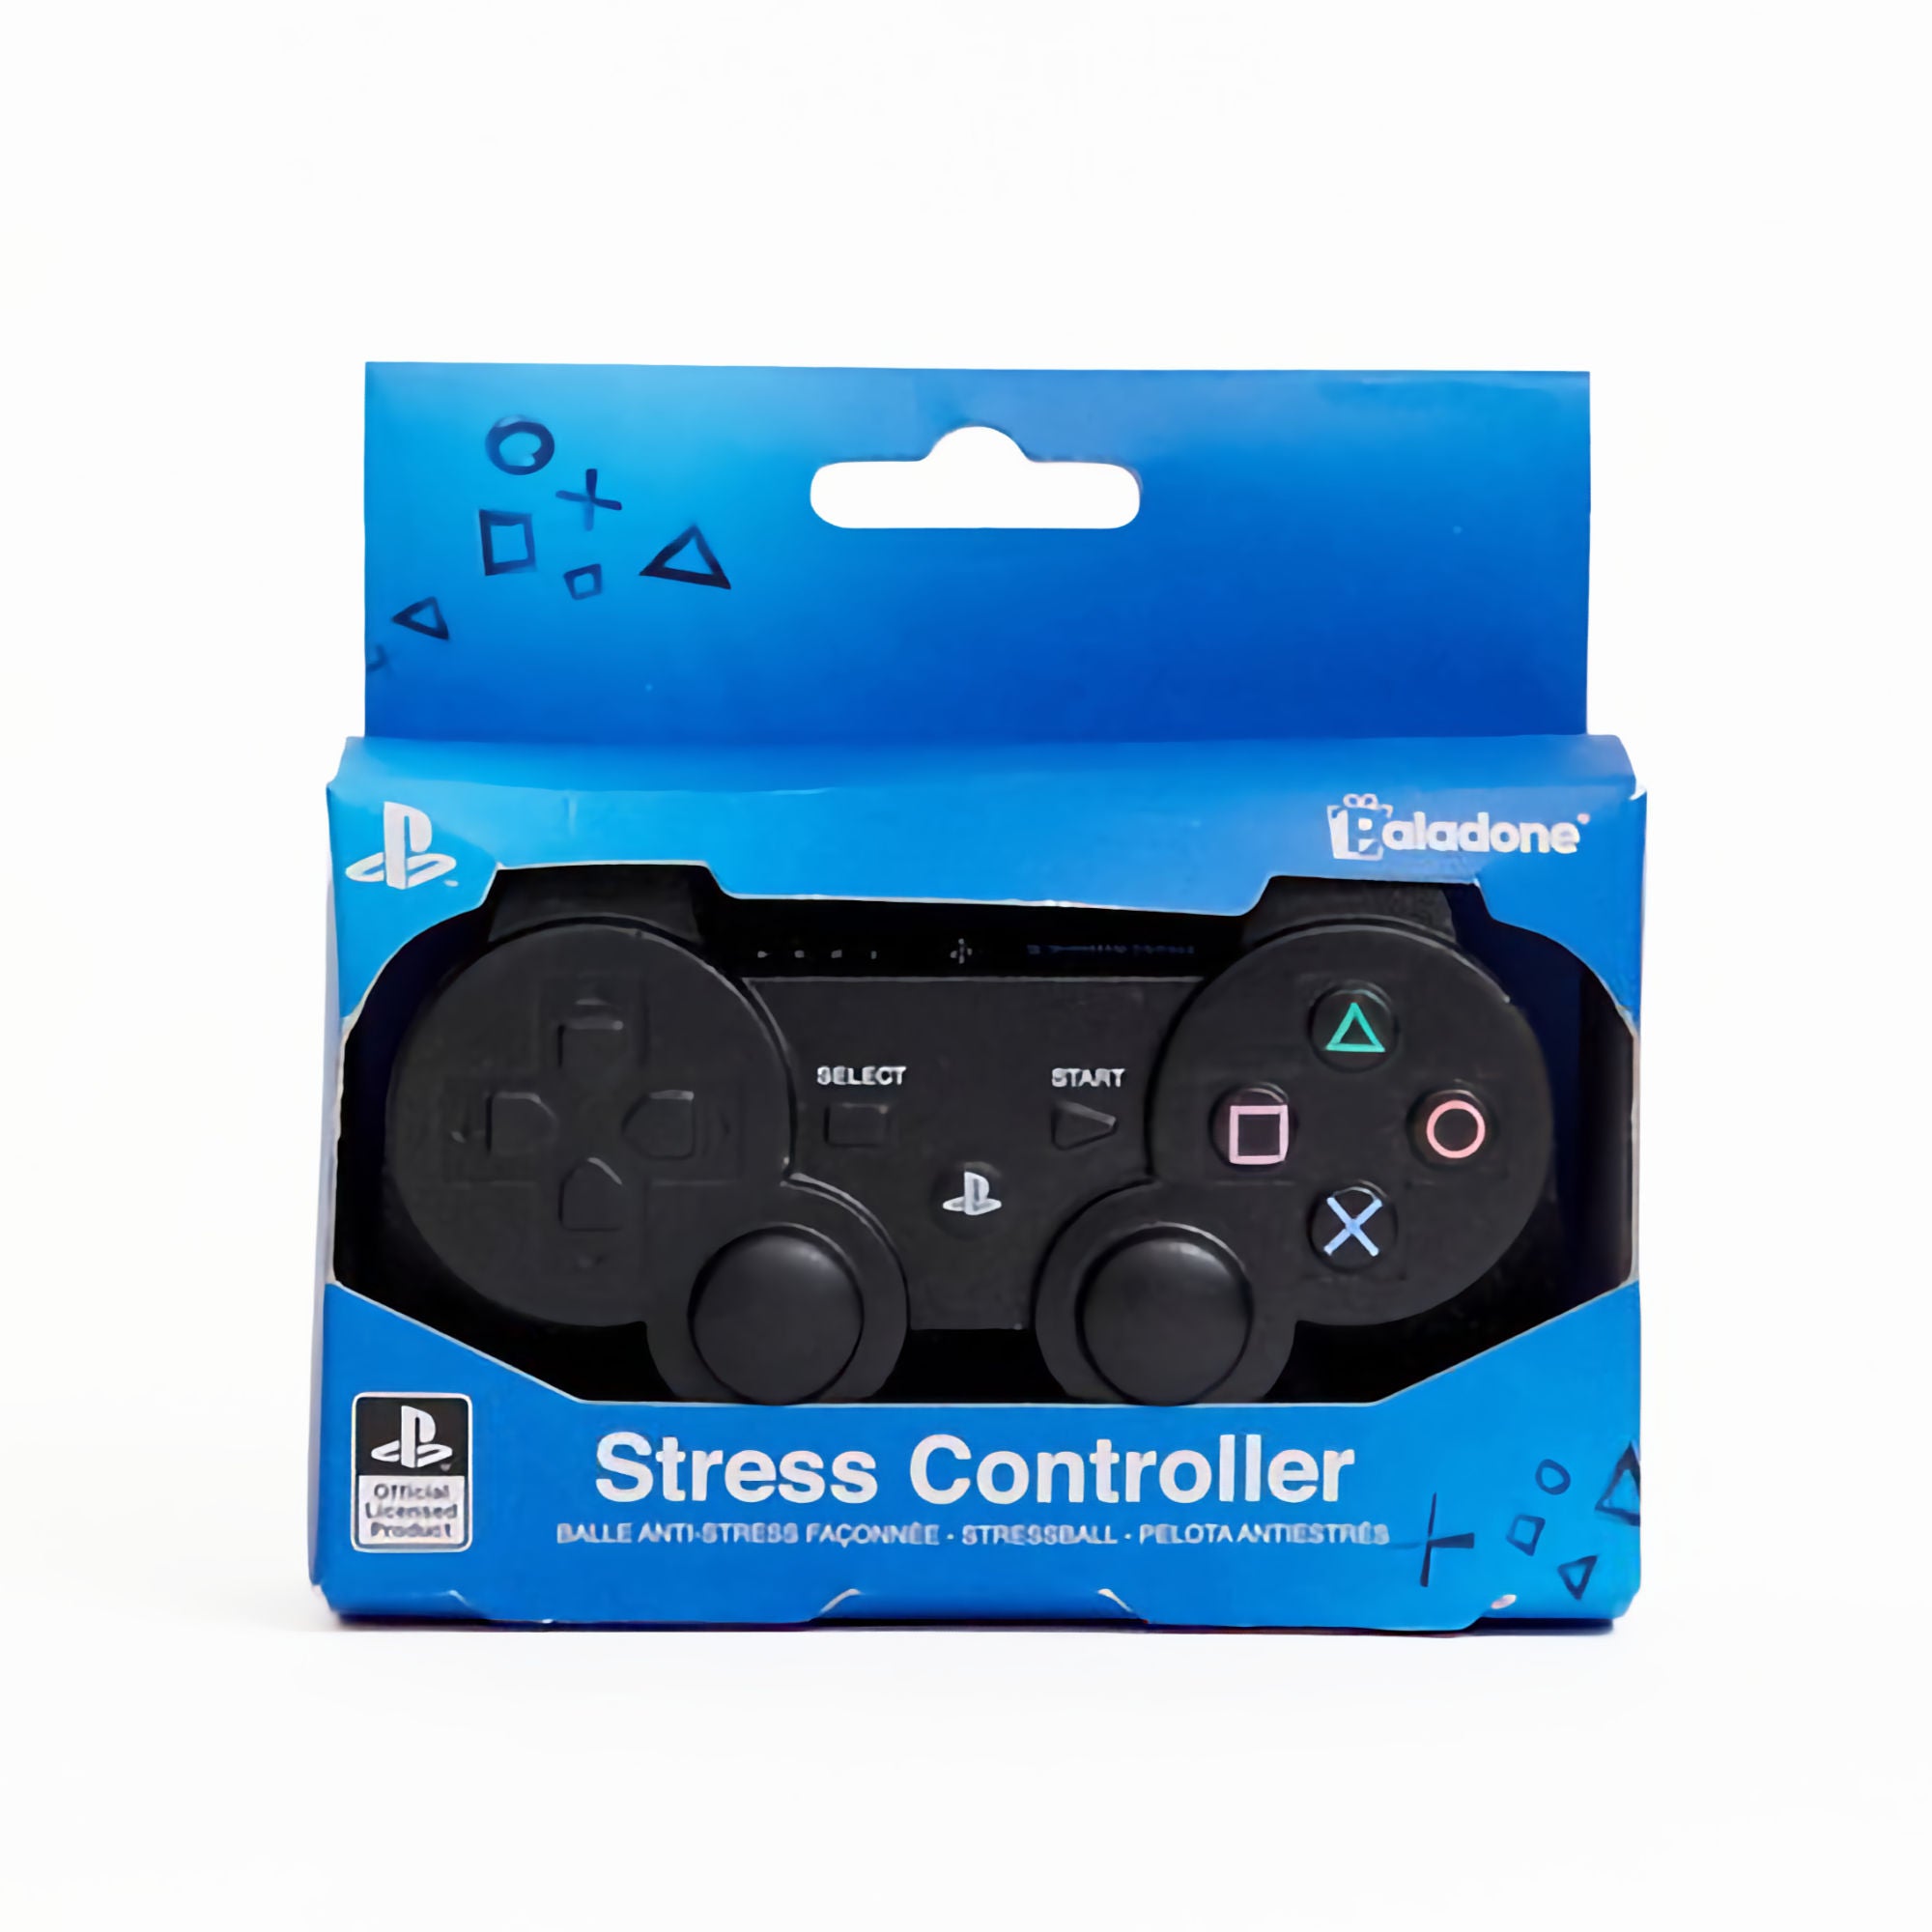 ps stress controller